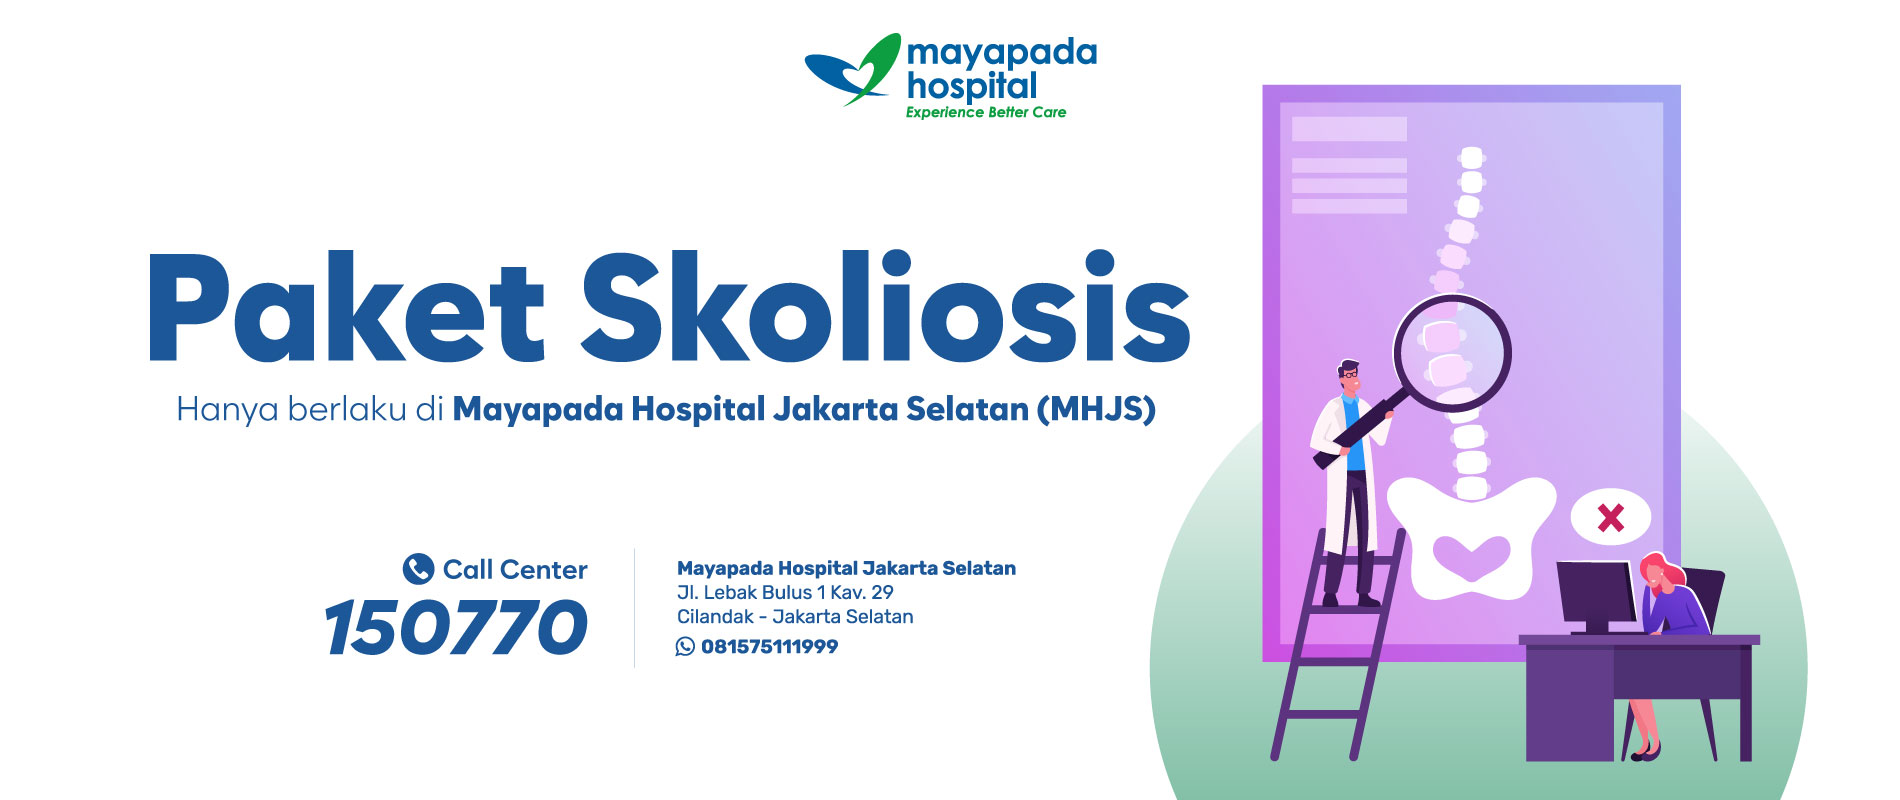 Paket Skoliosis Mayapada Hospital Jakarta Selatan (MHJS) IMG